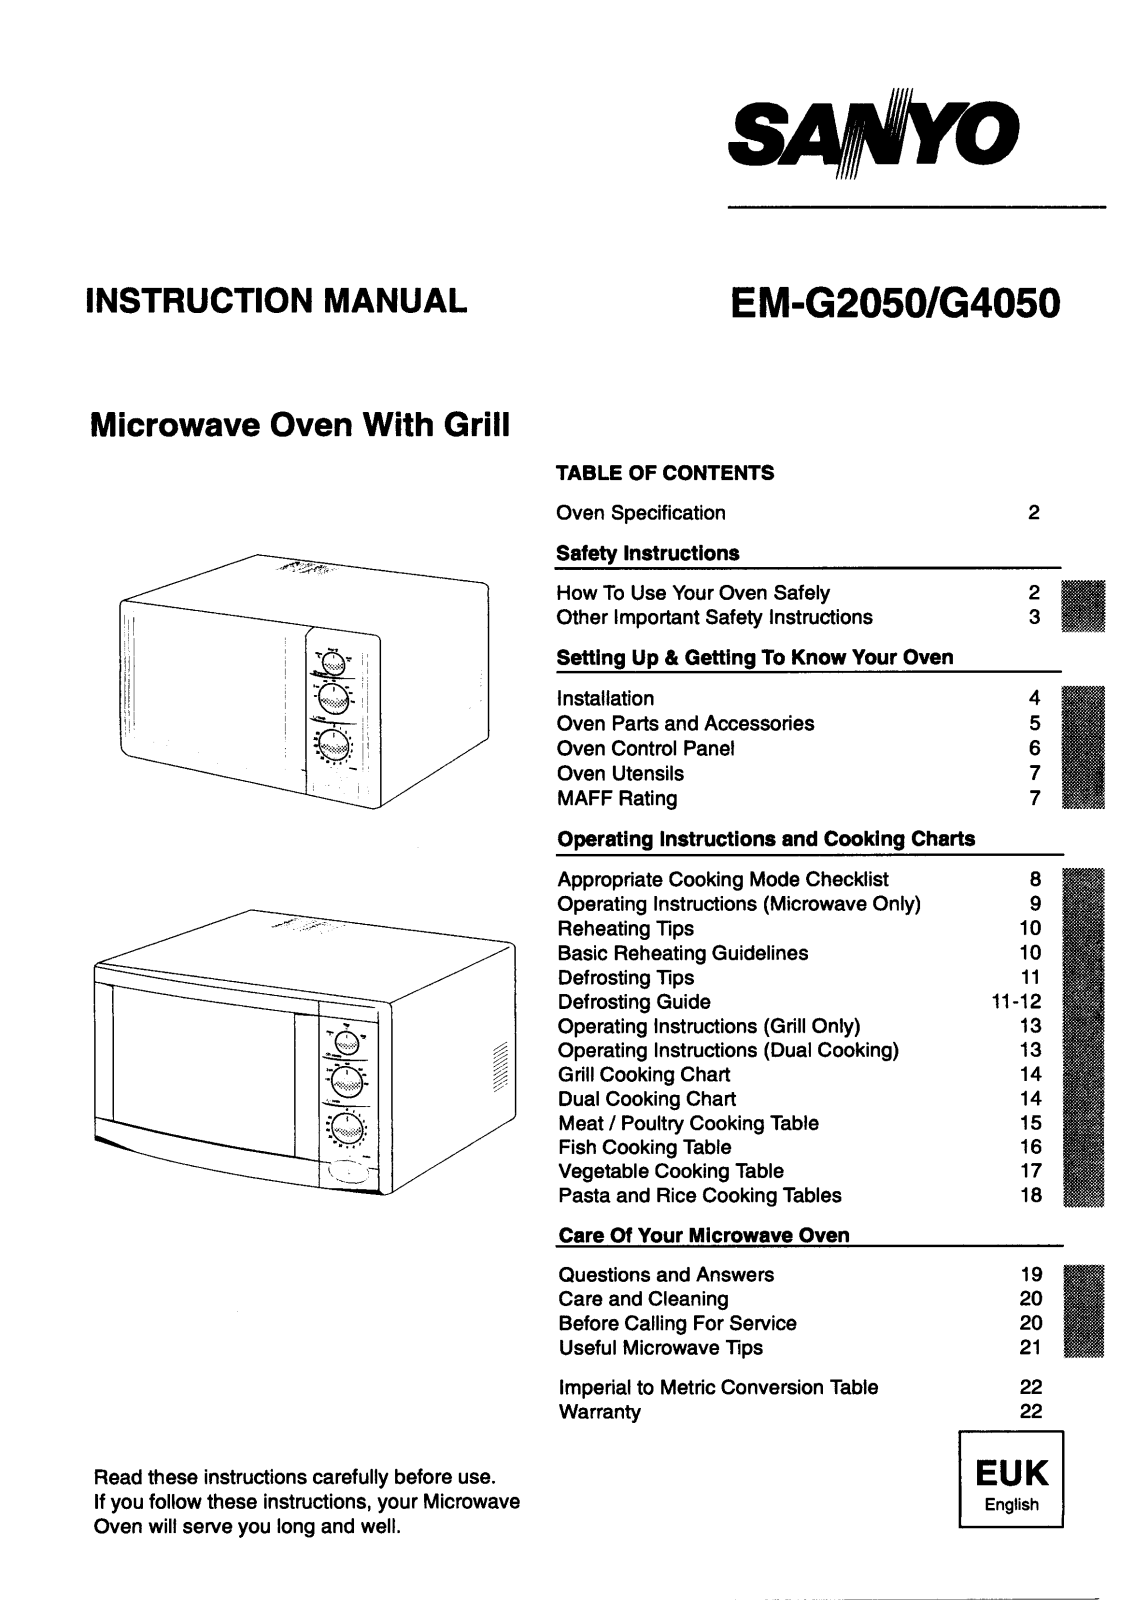 Sanyo EM-G4050, EM-G2050 Instruction Manual